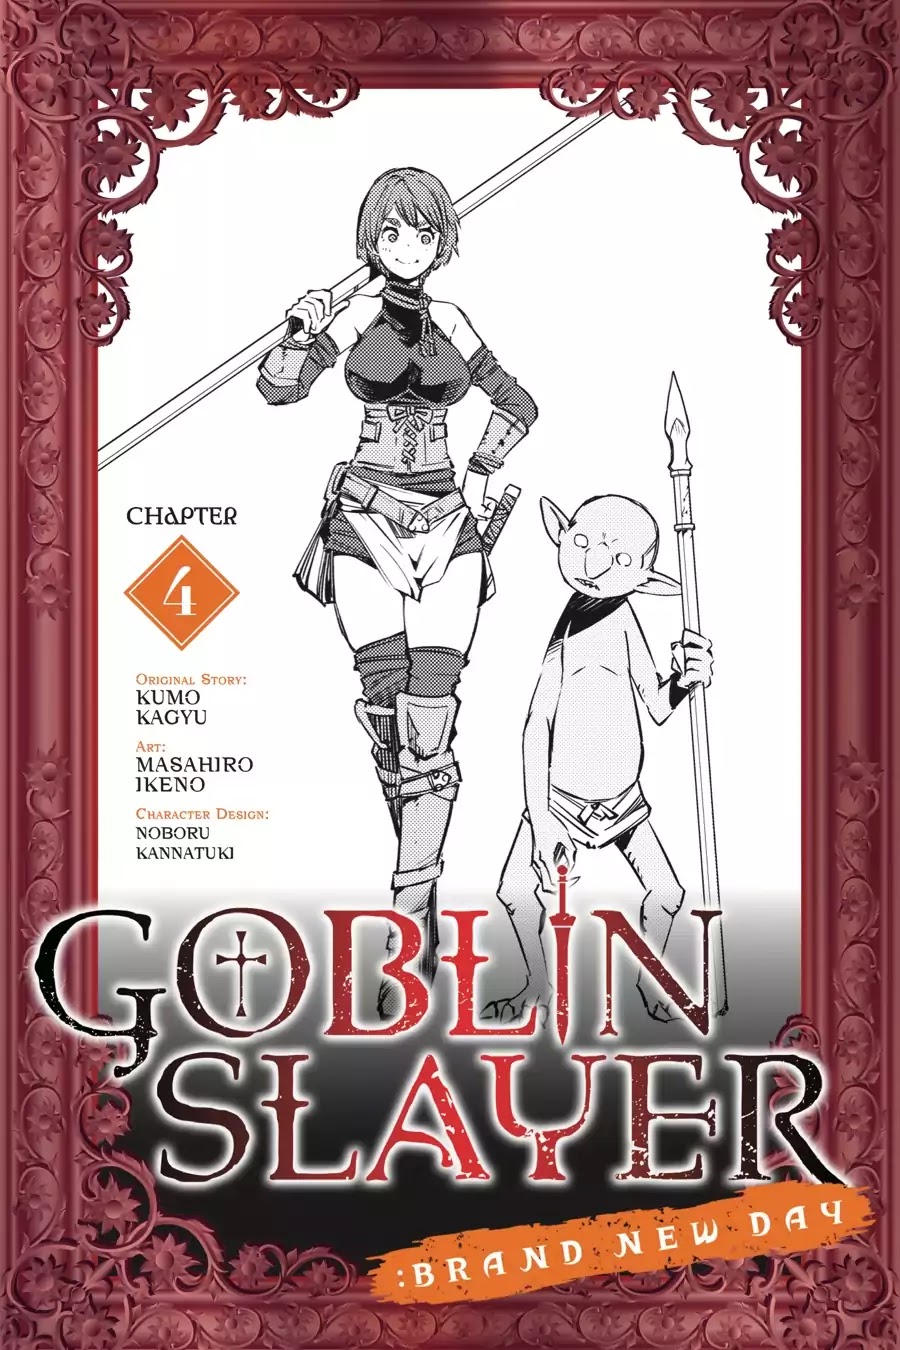 Goblin Slayer Side Story: Year One - The Fall 2018 Manga Guide - Anime News  Network